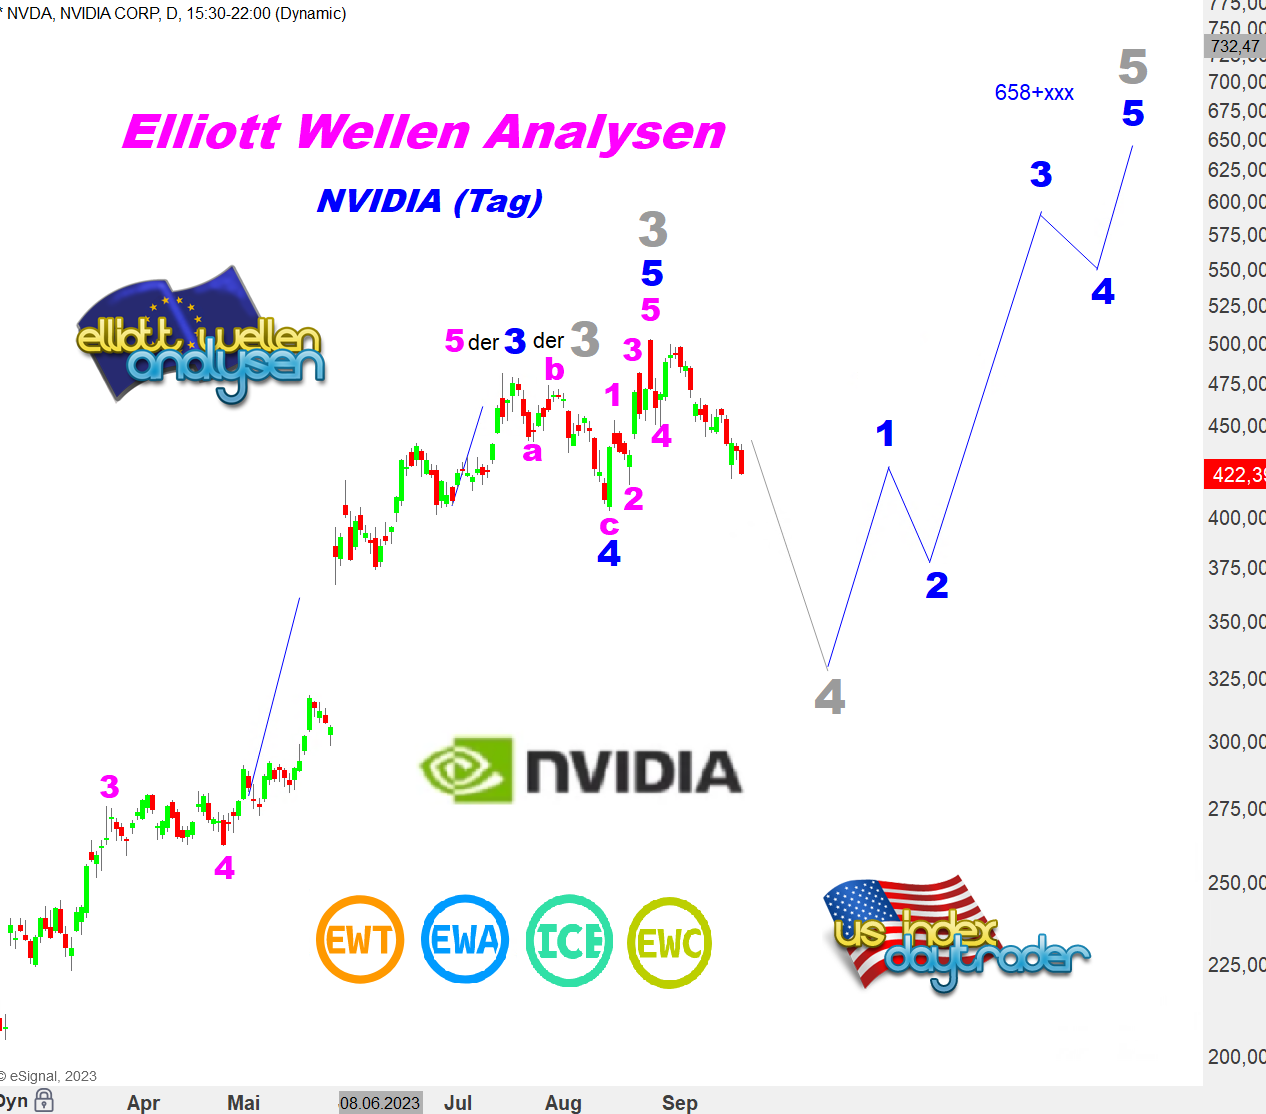 EW-Analyse-NVIDIA-Aus-5-wird-5-André-Tiedje-stock3.com-1